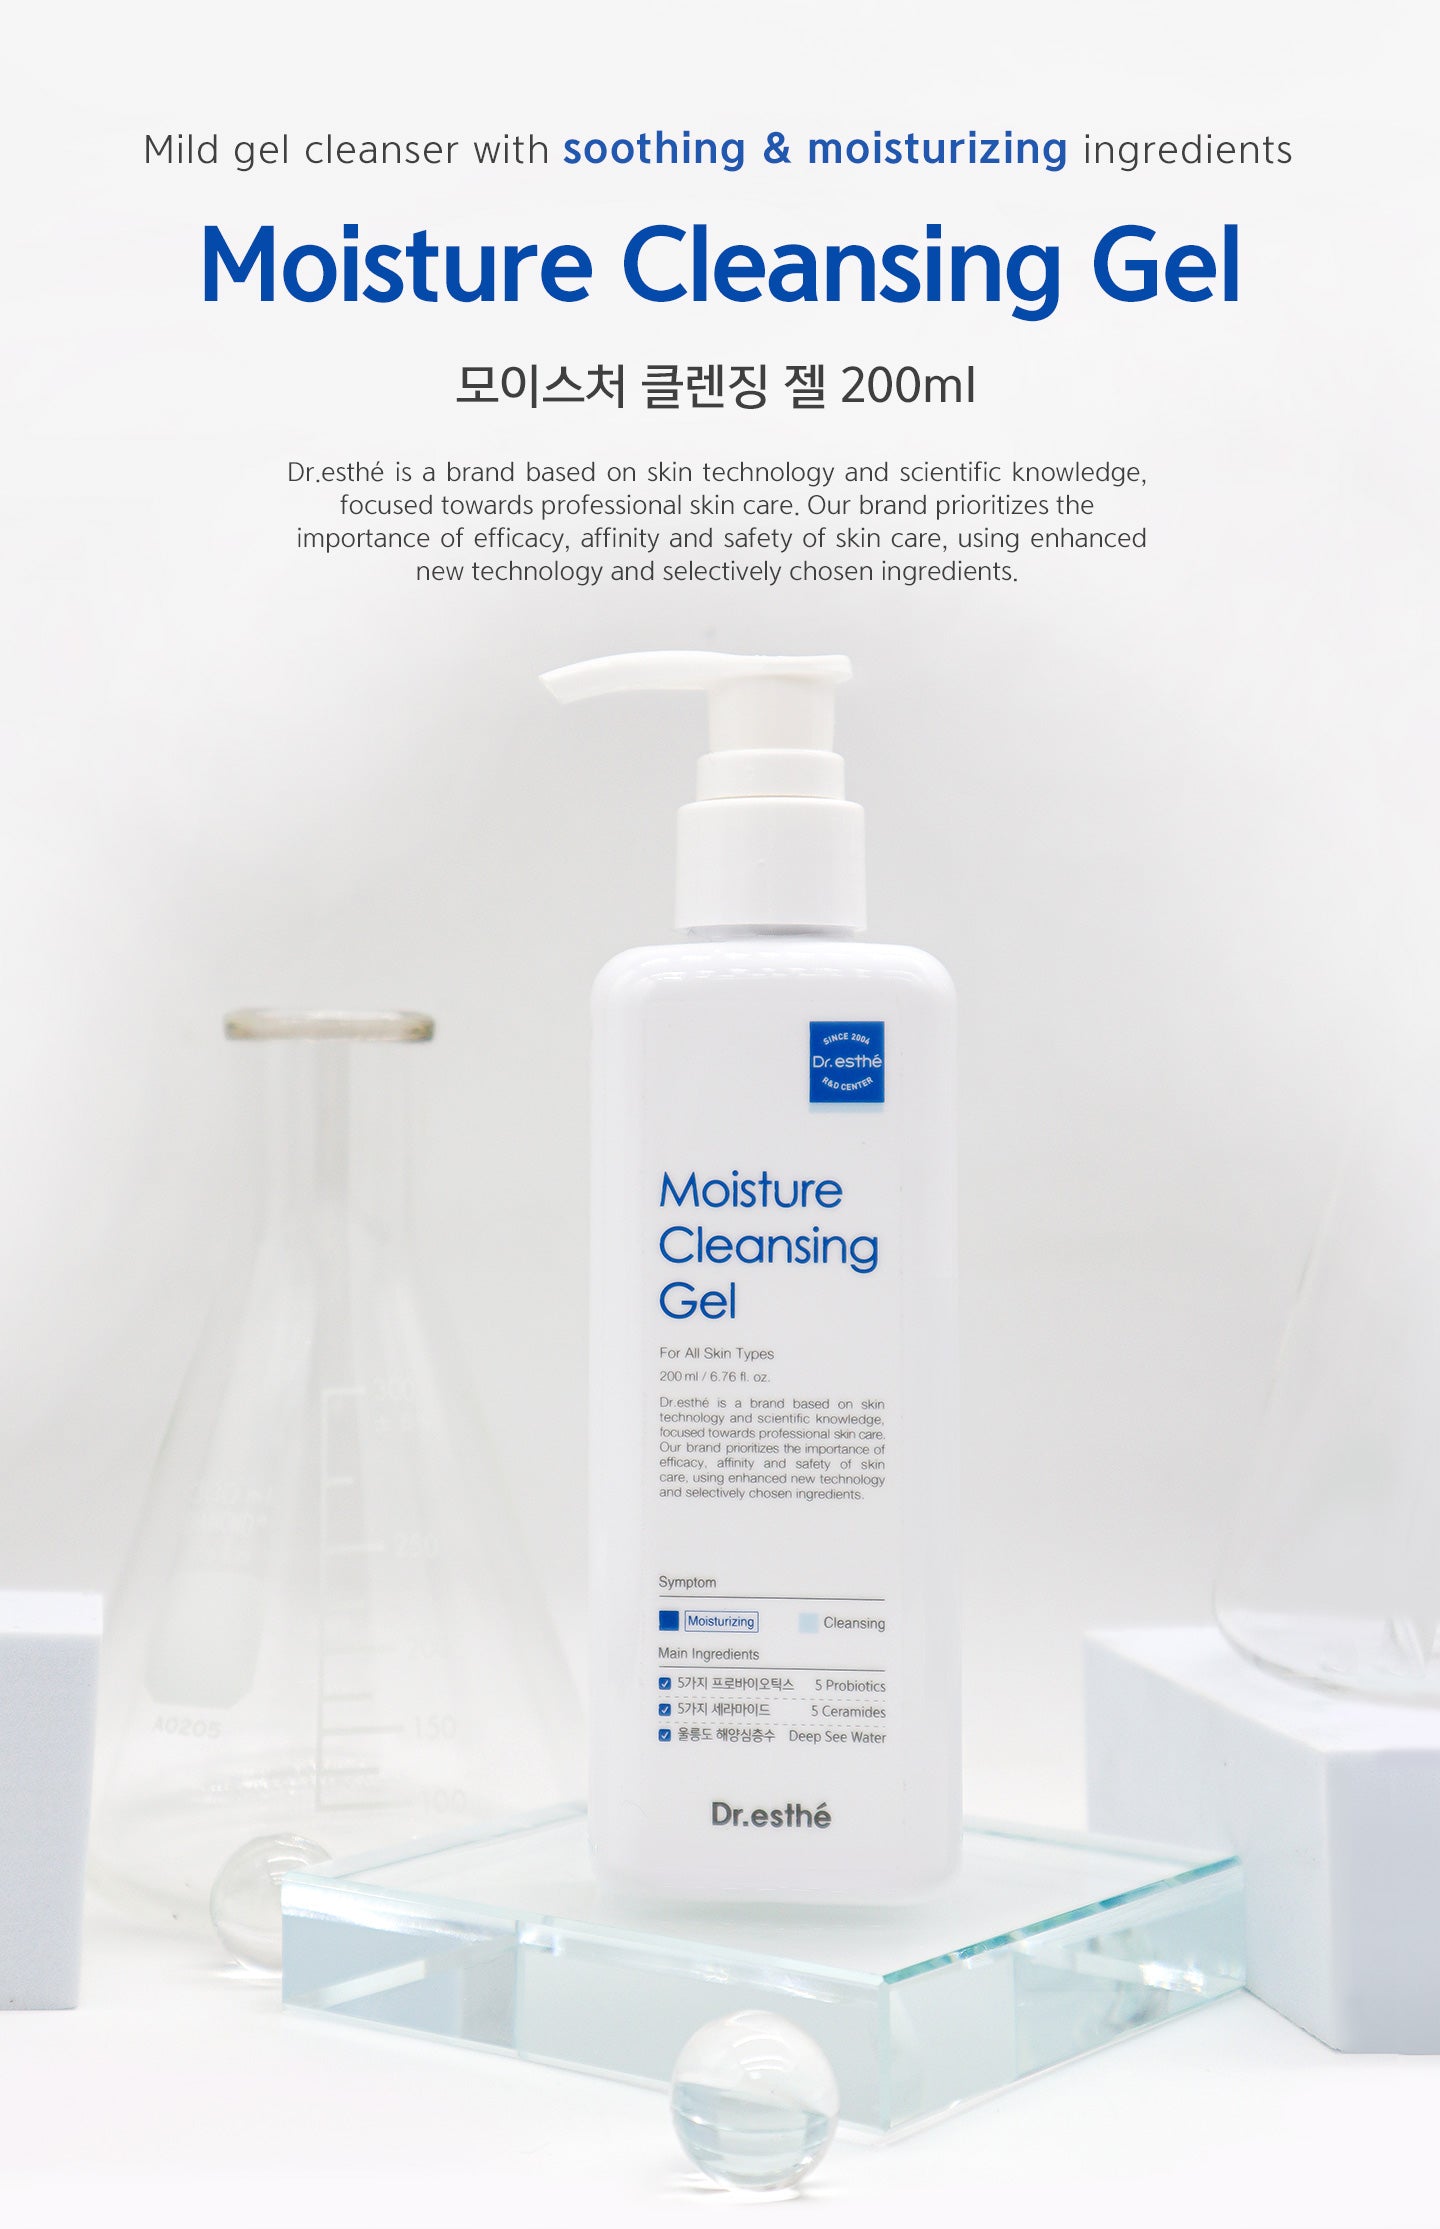 Mild gel cleanser with soothing & moisturizing ingredients. Moisture cleansing gel